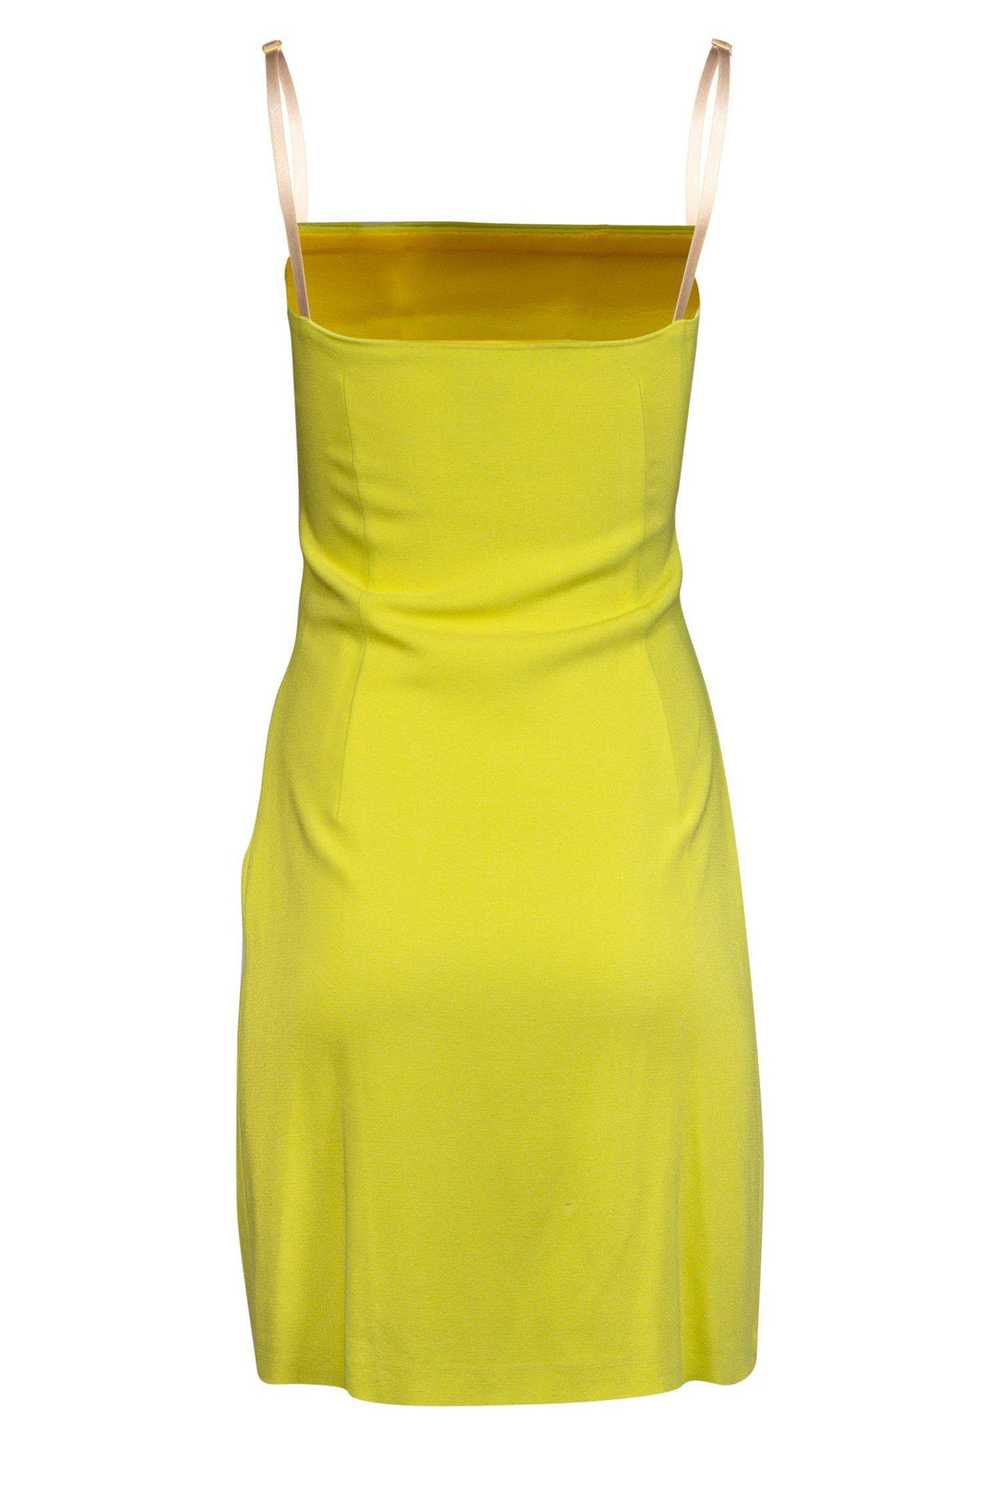 Dolce & Gabbana - Bright Yellow Bodycon Dress Sz 2 - image 3